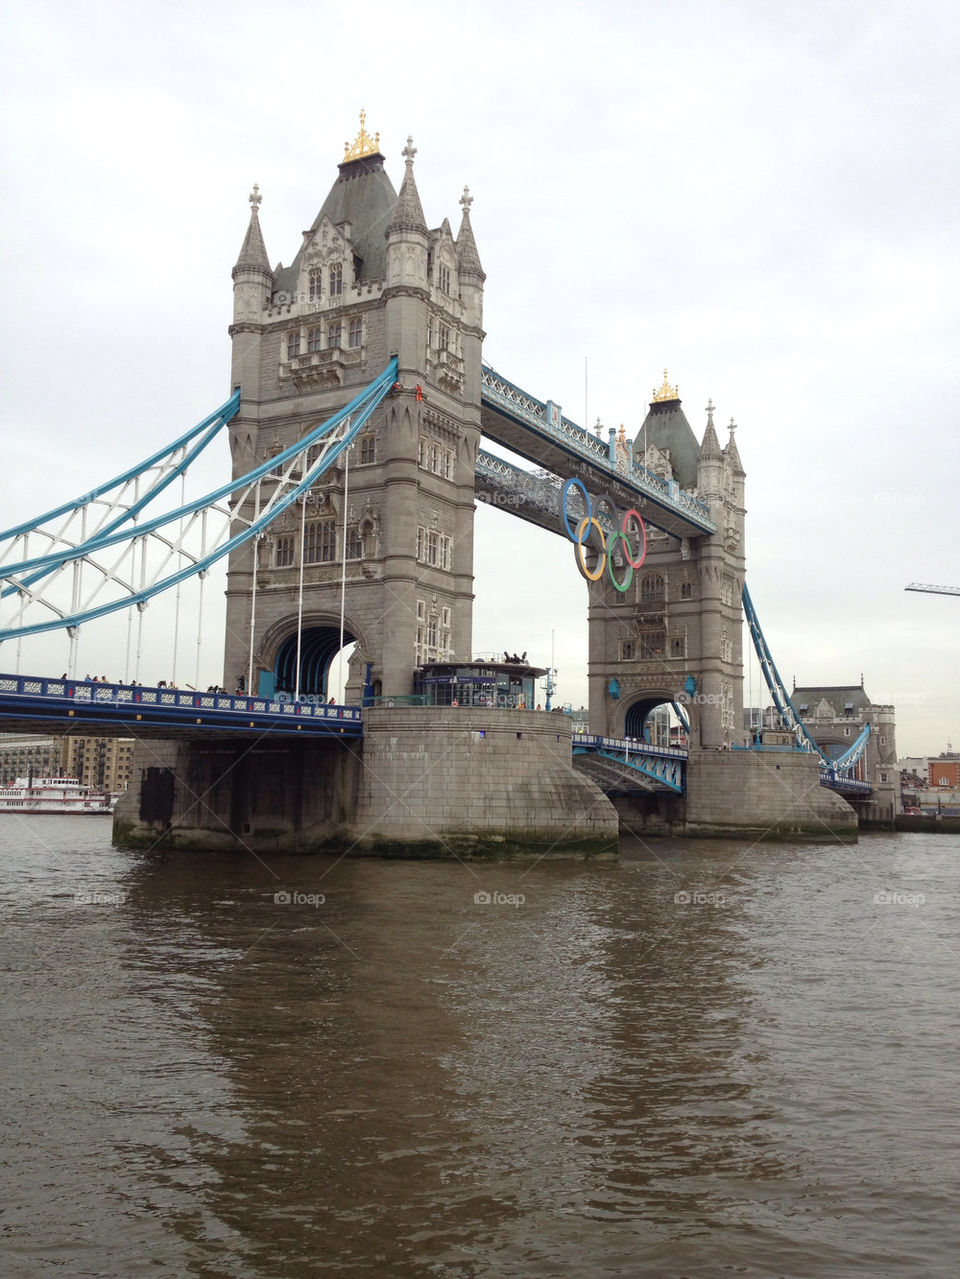 london 2012 bridge tower by robertsst